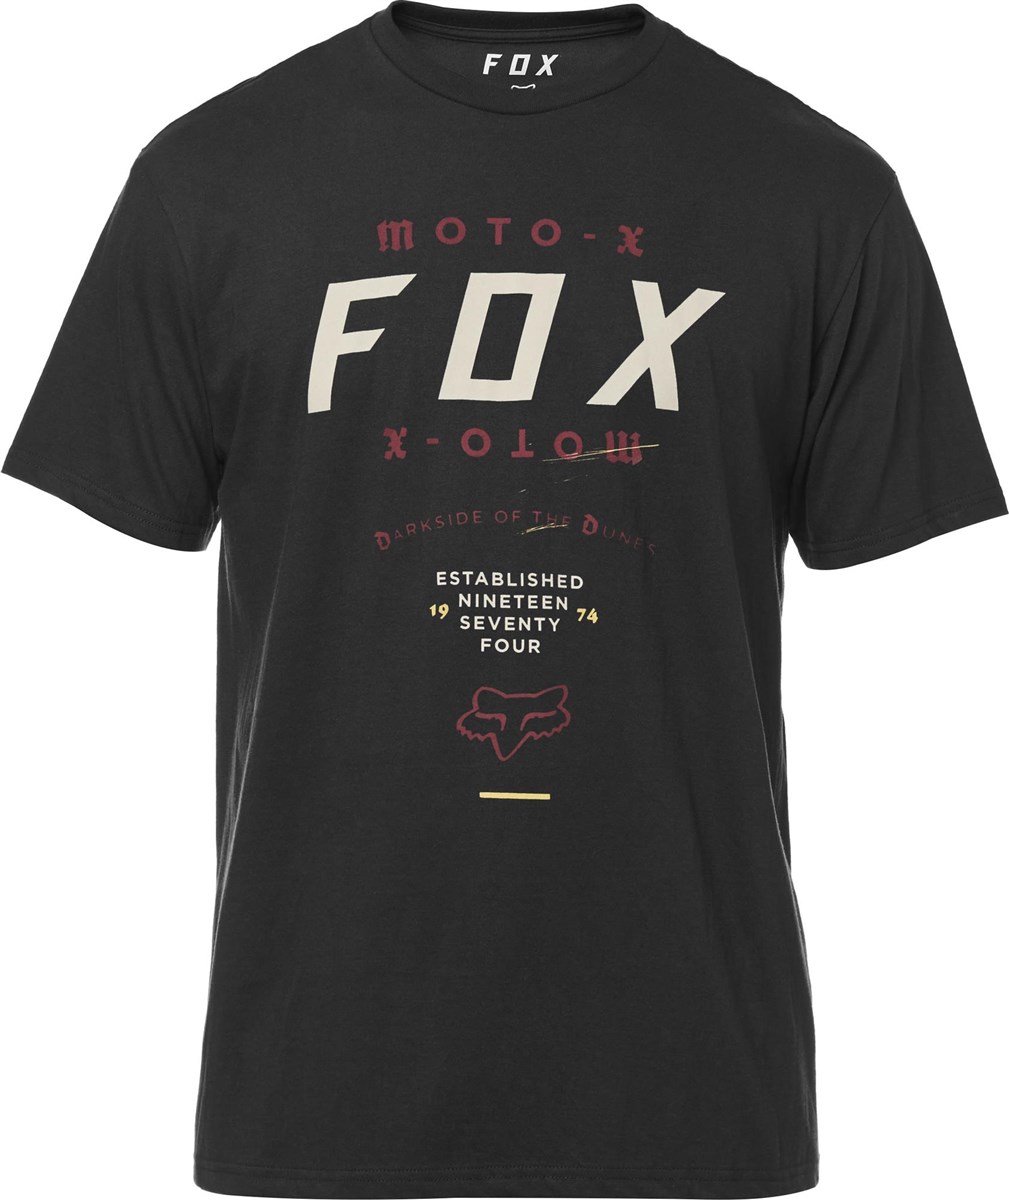 Fox Clothing Dunes Short Sleeve Premium Tee product image